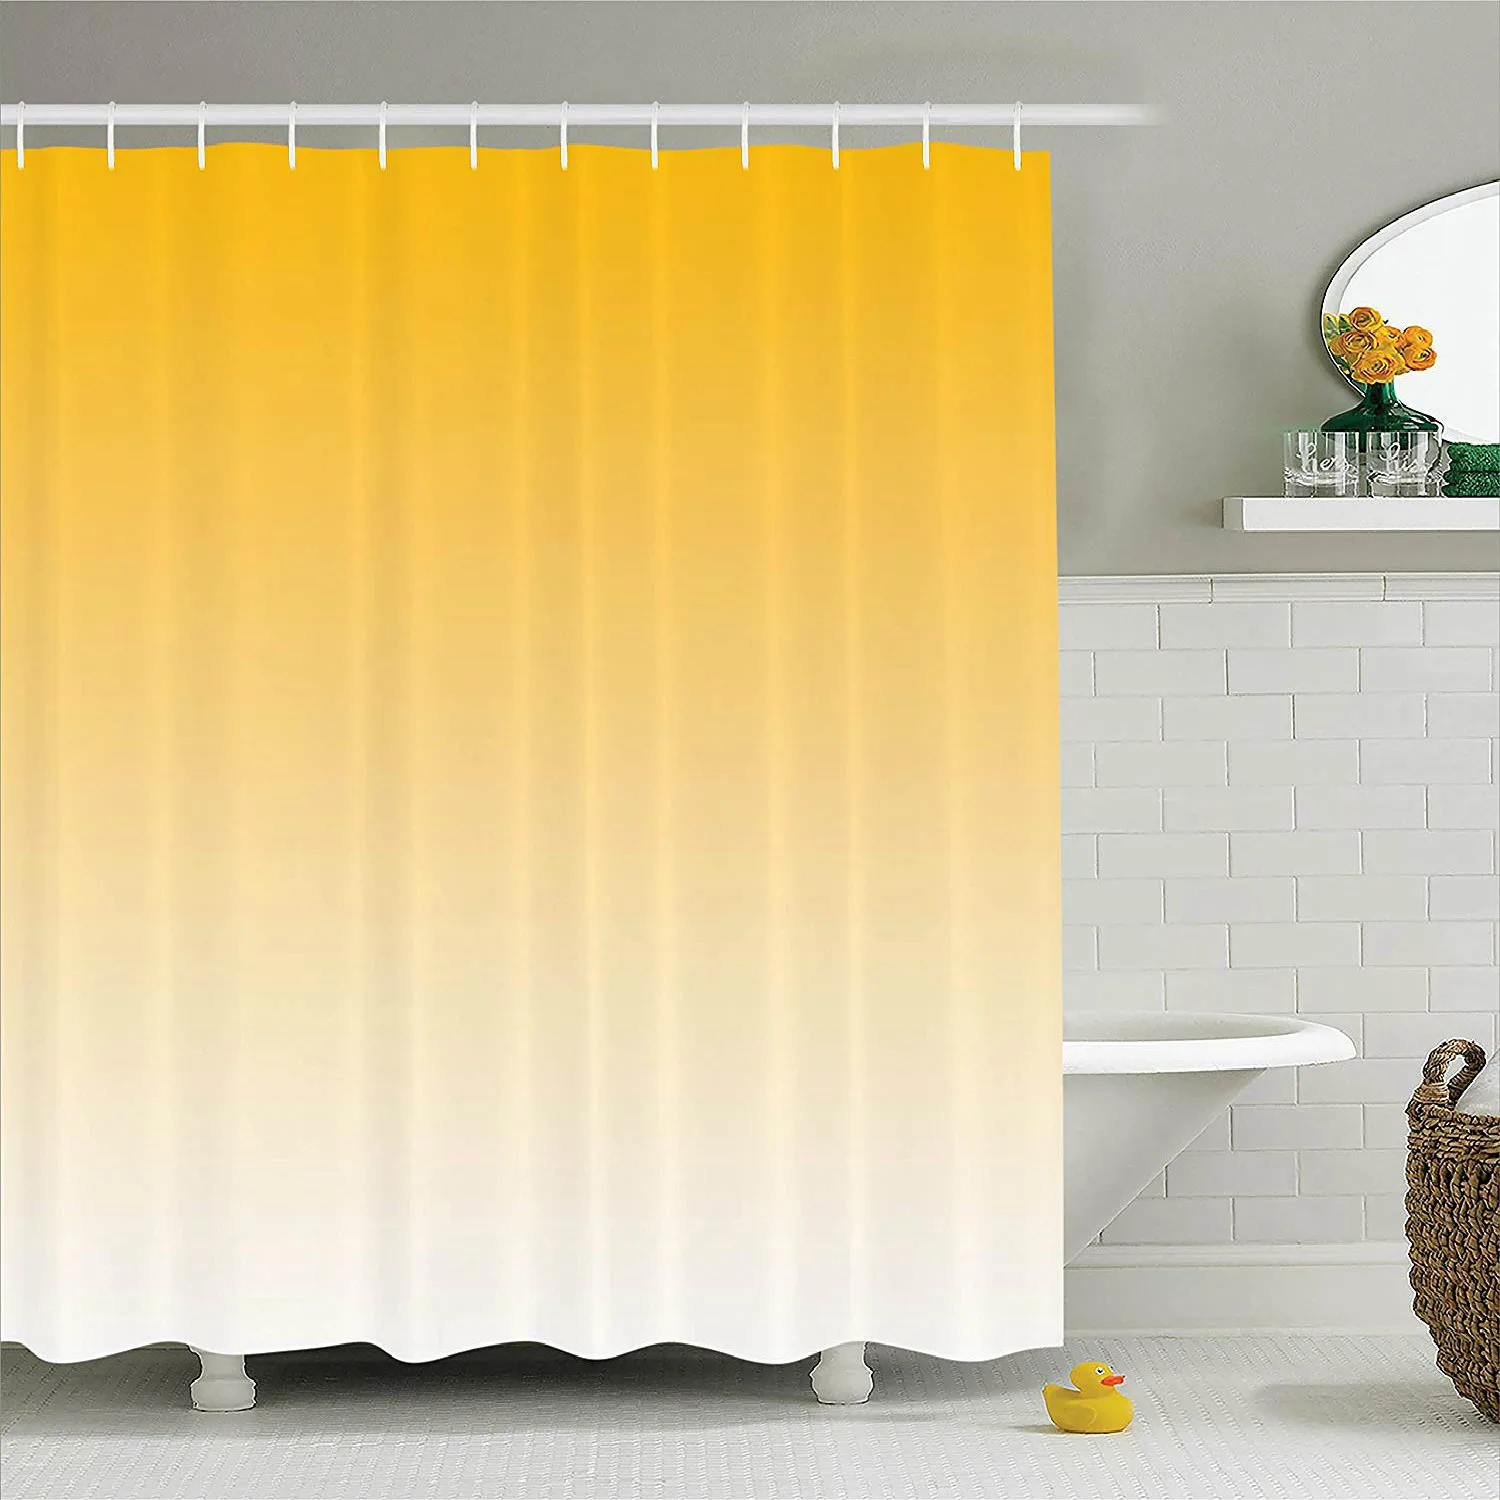 Shower Curtain Summer Love on the Beach Theme Inspired for Yellow Modern  Design Fabric Bathroom Decor